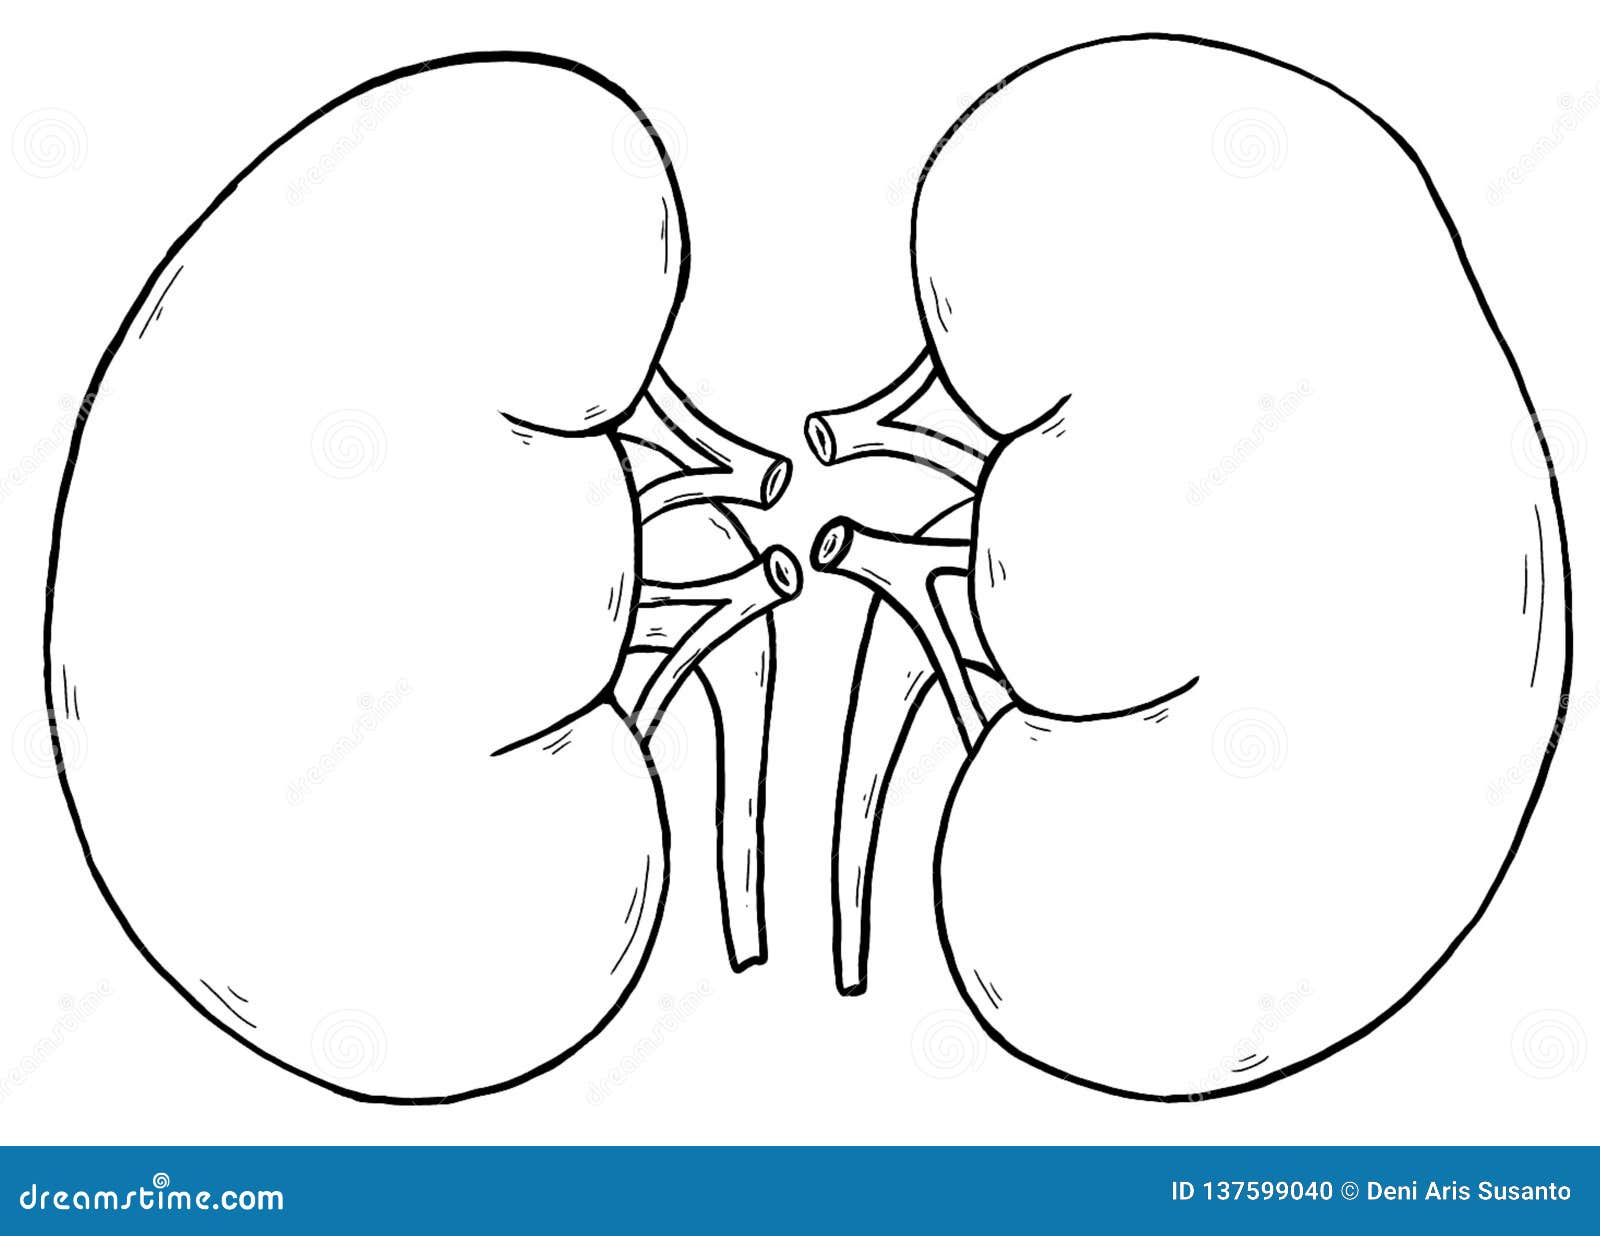 Illustration of left and right kidney outline stock illustration